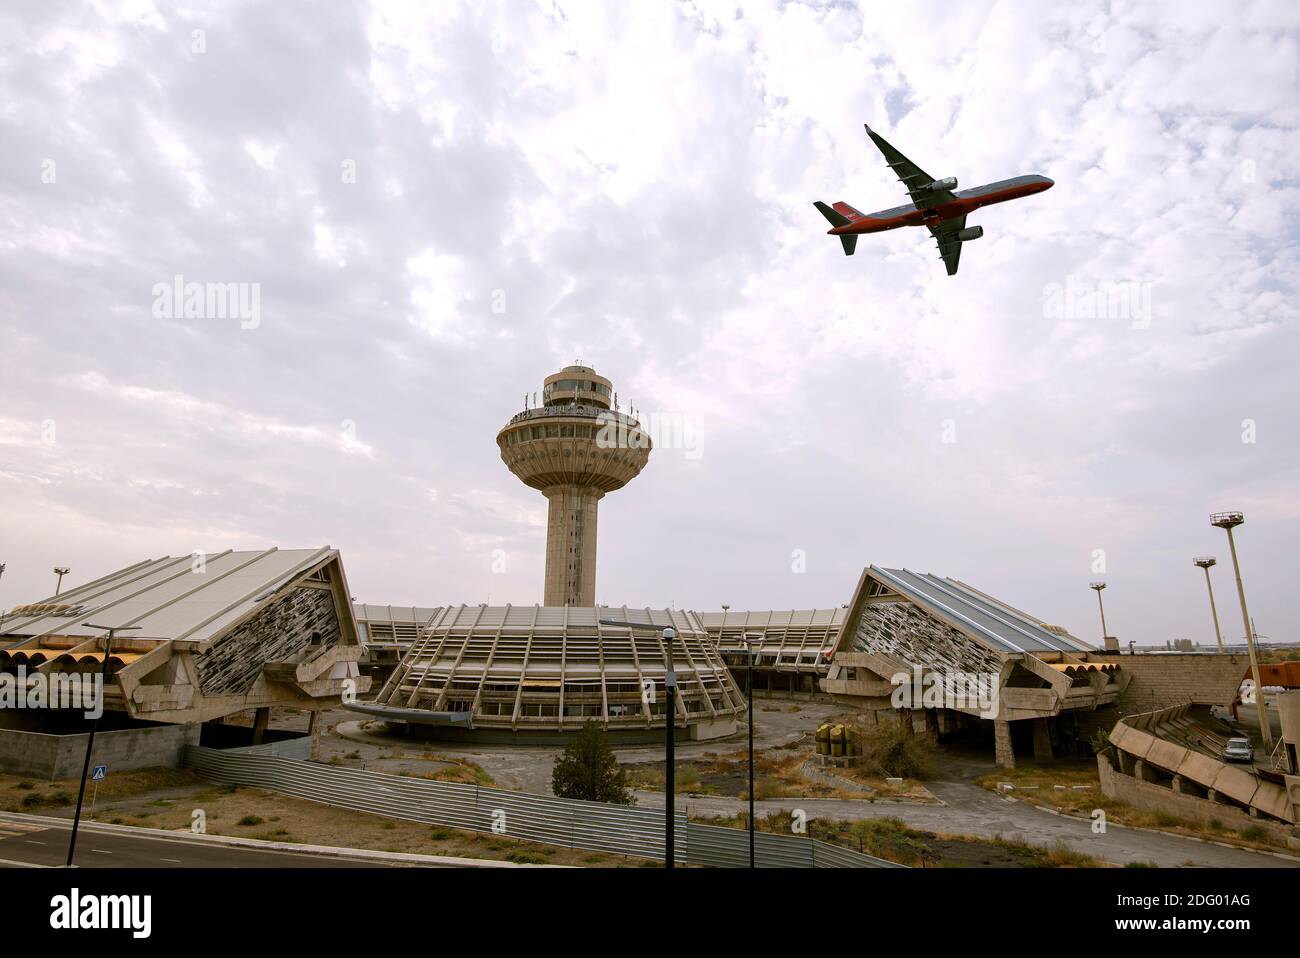 YEREVAN - CIRCA NOV 2017: Tower of an old terminal Zvartnots airport in Yerevan, November 2017 in Armenia Stock Photo